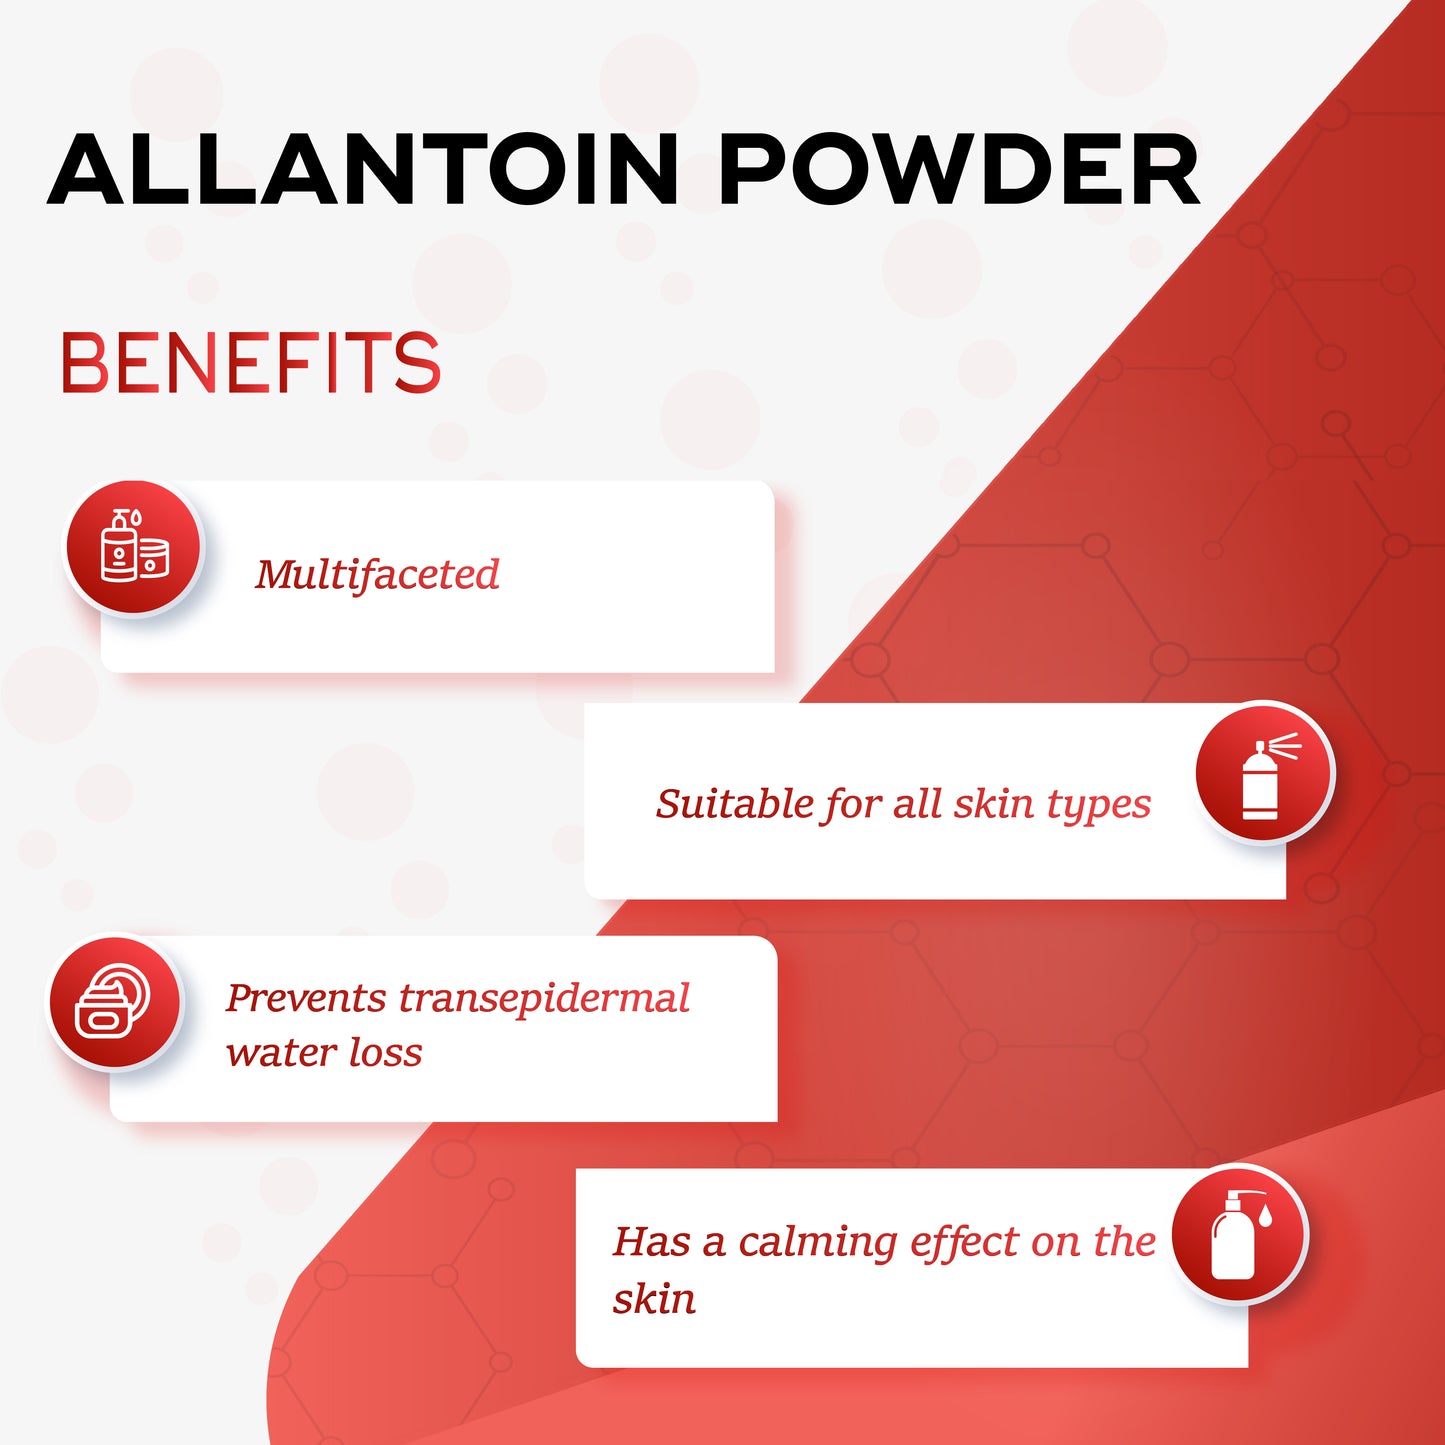 allantoin powder benefits, benefits listed for allantoin powder